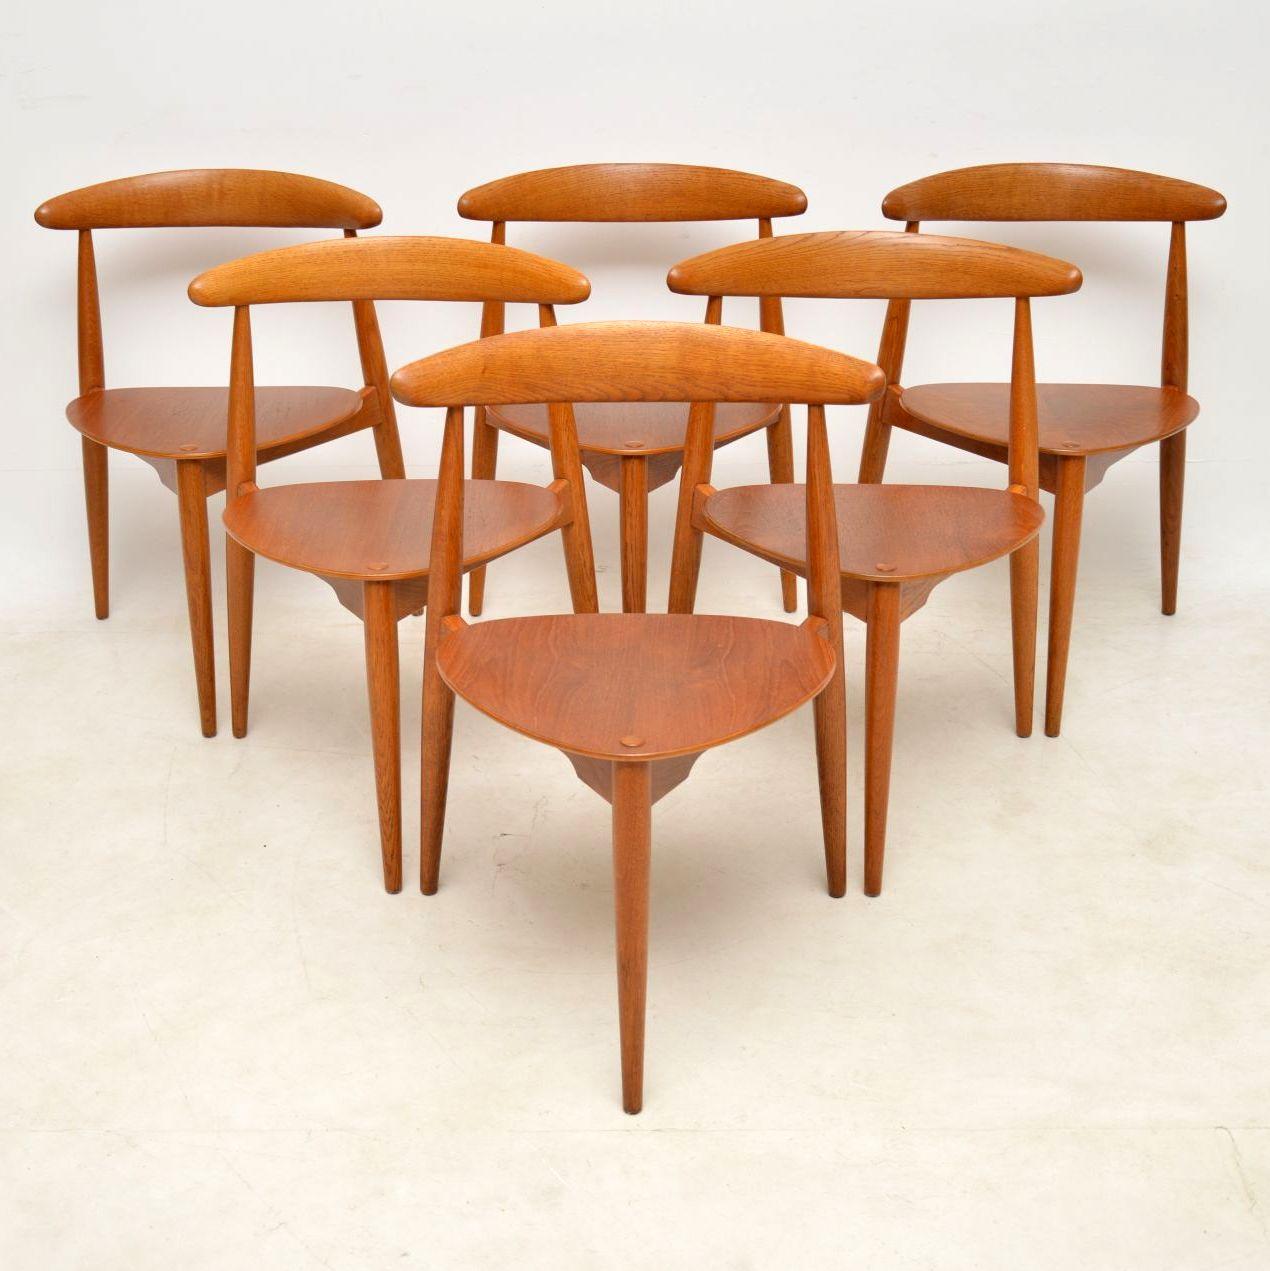 Mid-20th Century 1950s Danish Teak & Oak Dining Table & Chairs by Hans Wegner for Fritz Hansen